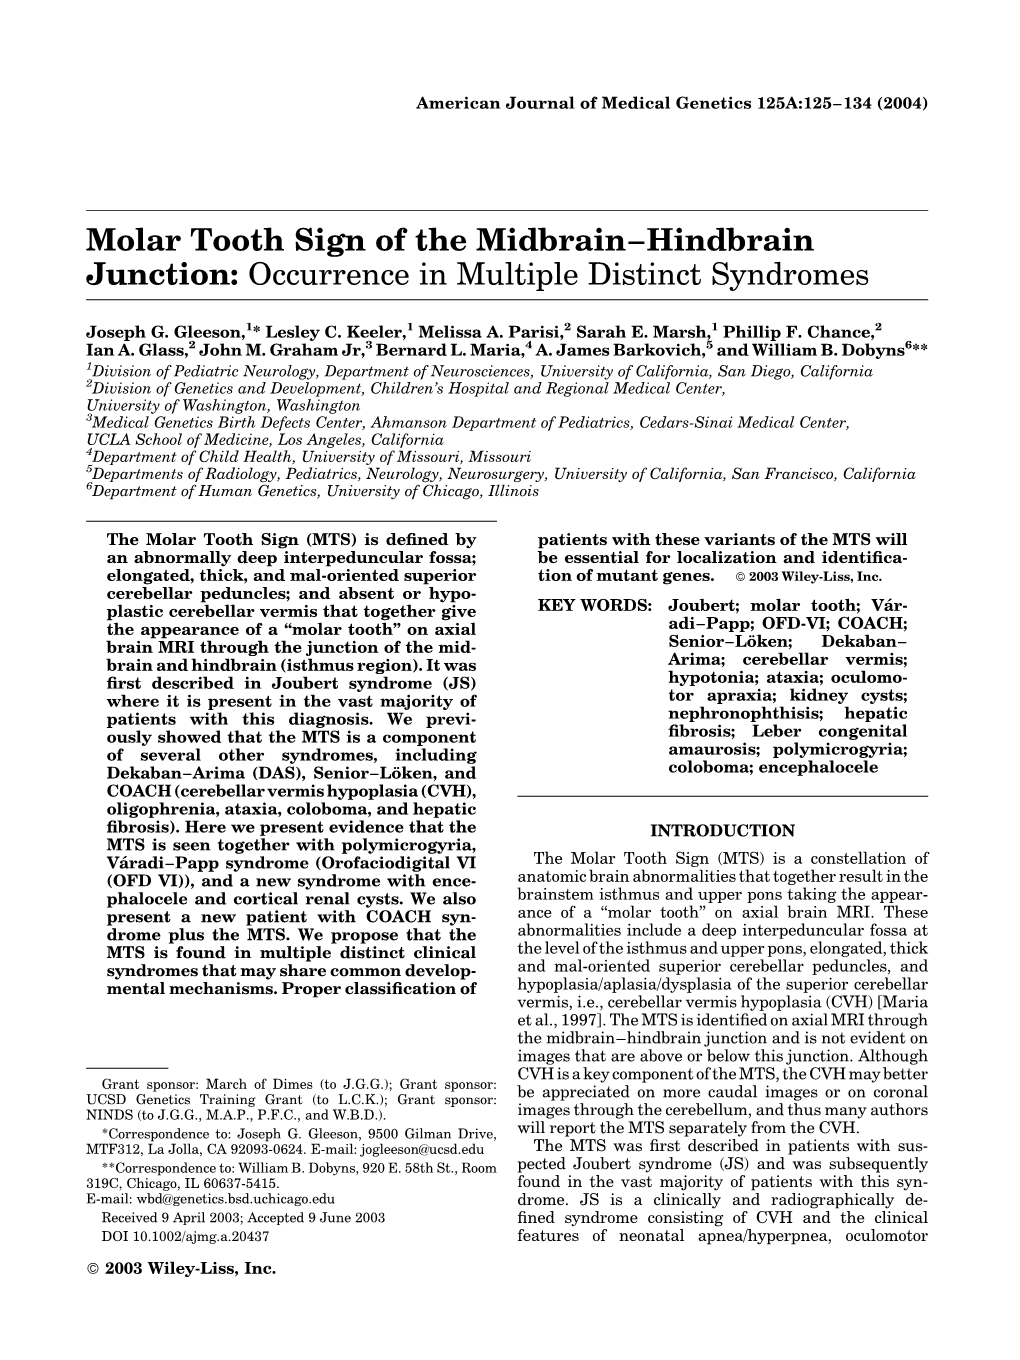 Molar Tooth Sign of the Midbrain-Hindbrain Junction